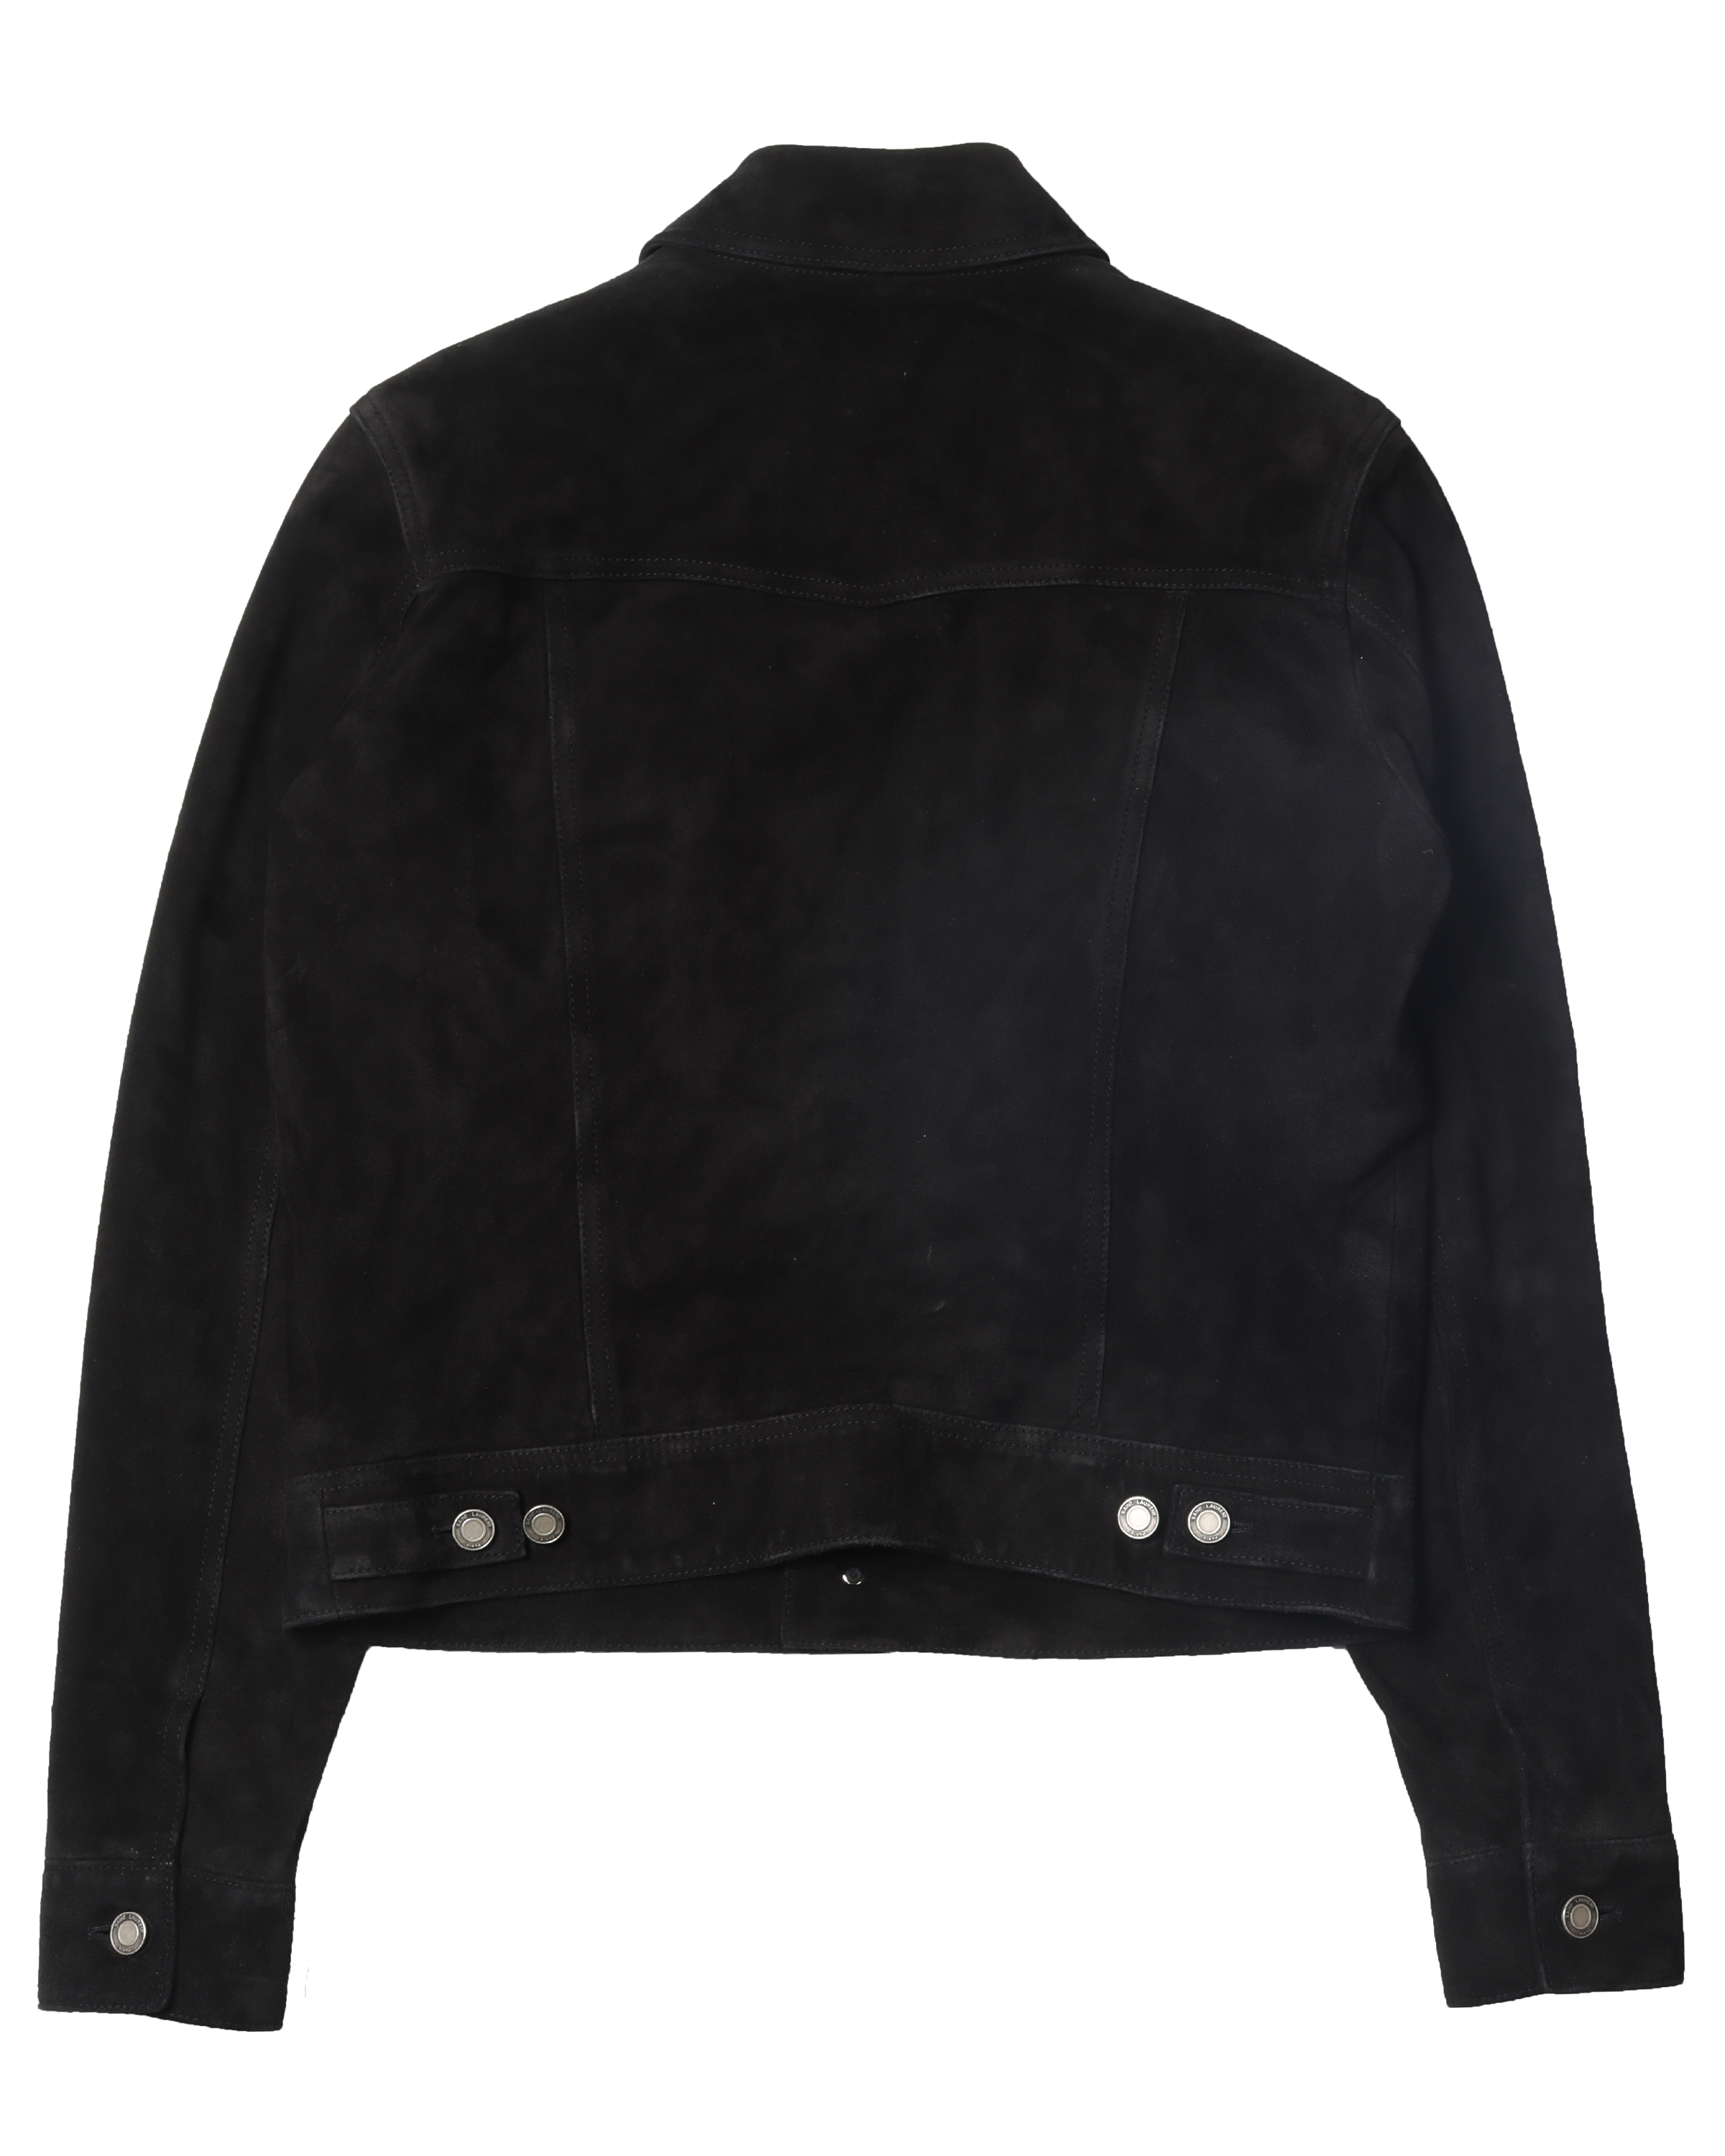 Black Suede Jacket